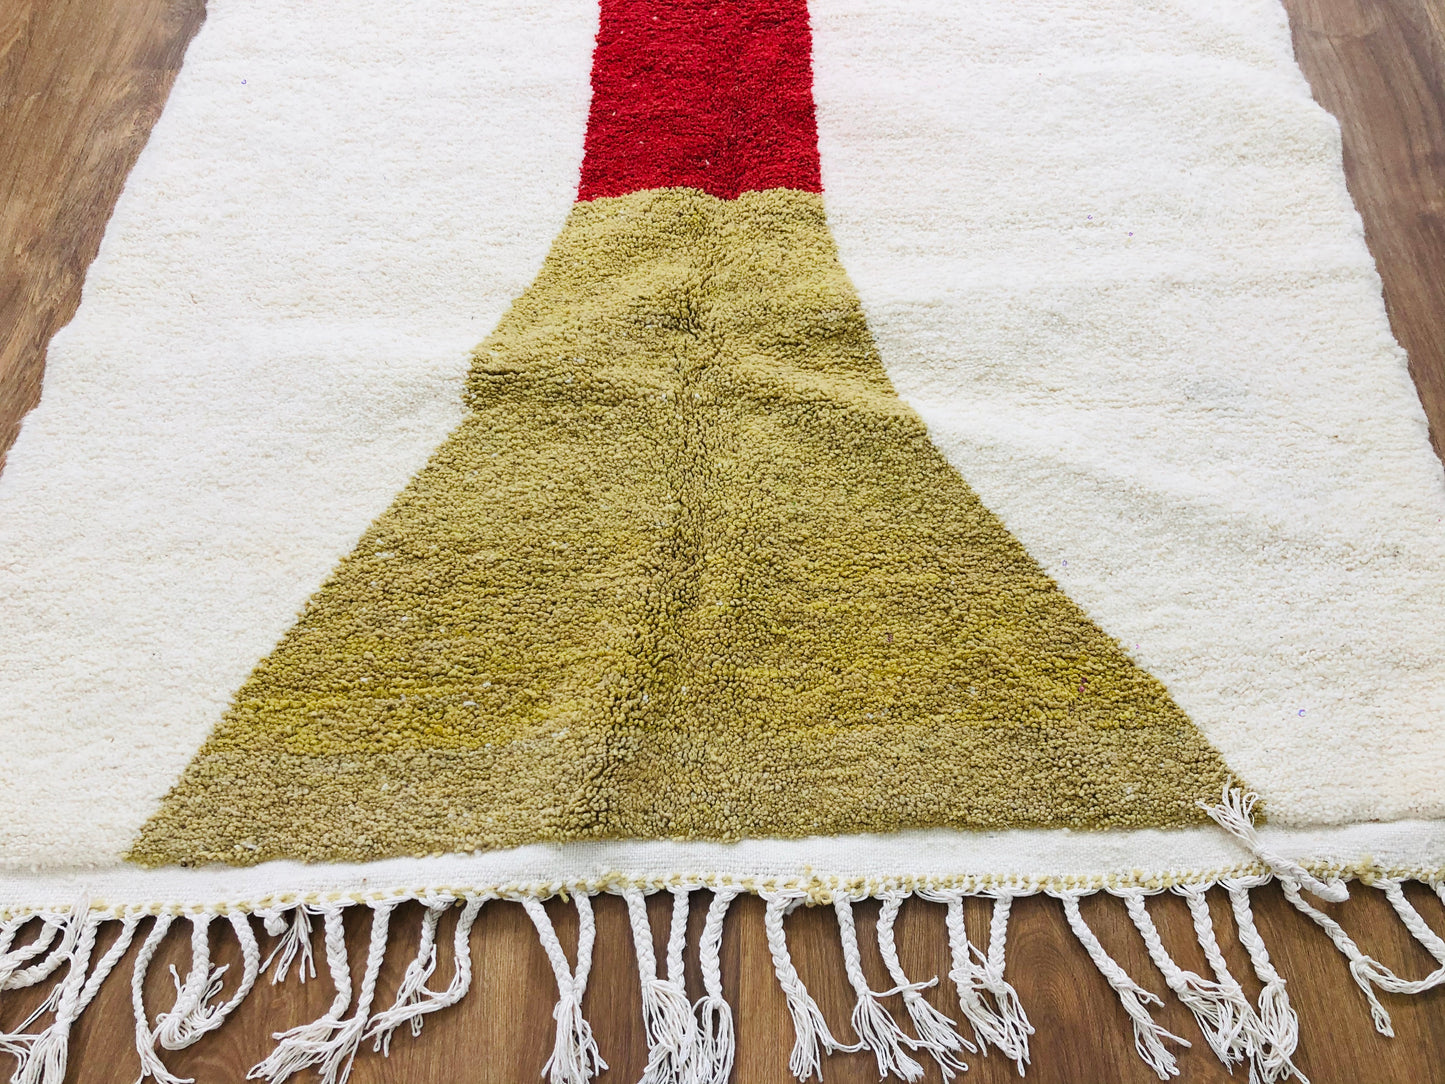 Handmade contemporary Moroccan Berber Beni Mrirt Rug "Nada" - 8.46 x 5.18 FT ( 258 x 158 CM ) Authentic handwoven carpet - MarrakeshLoom